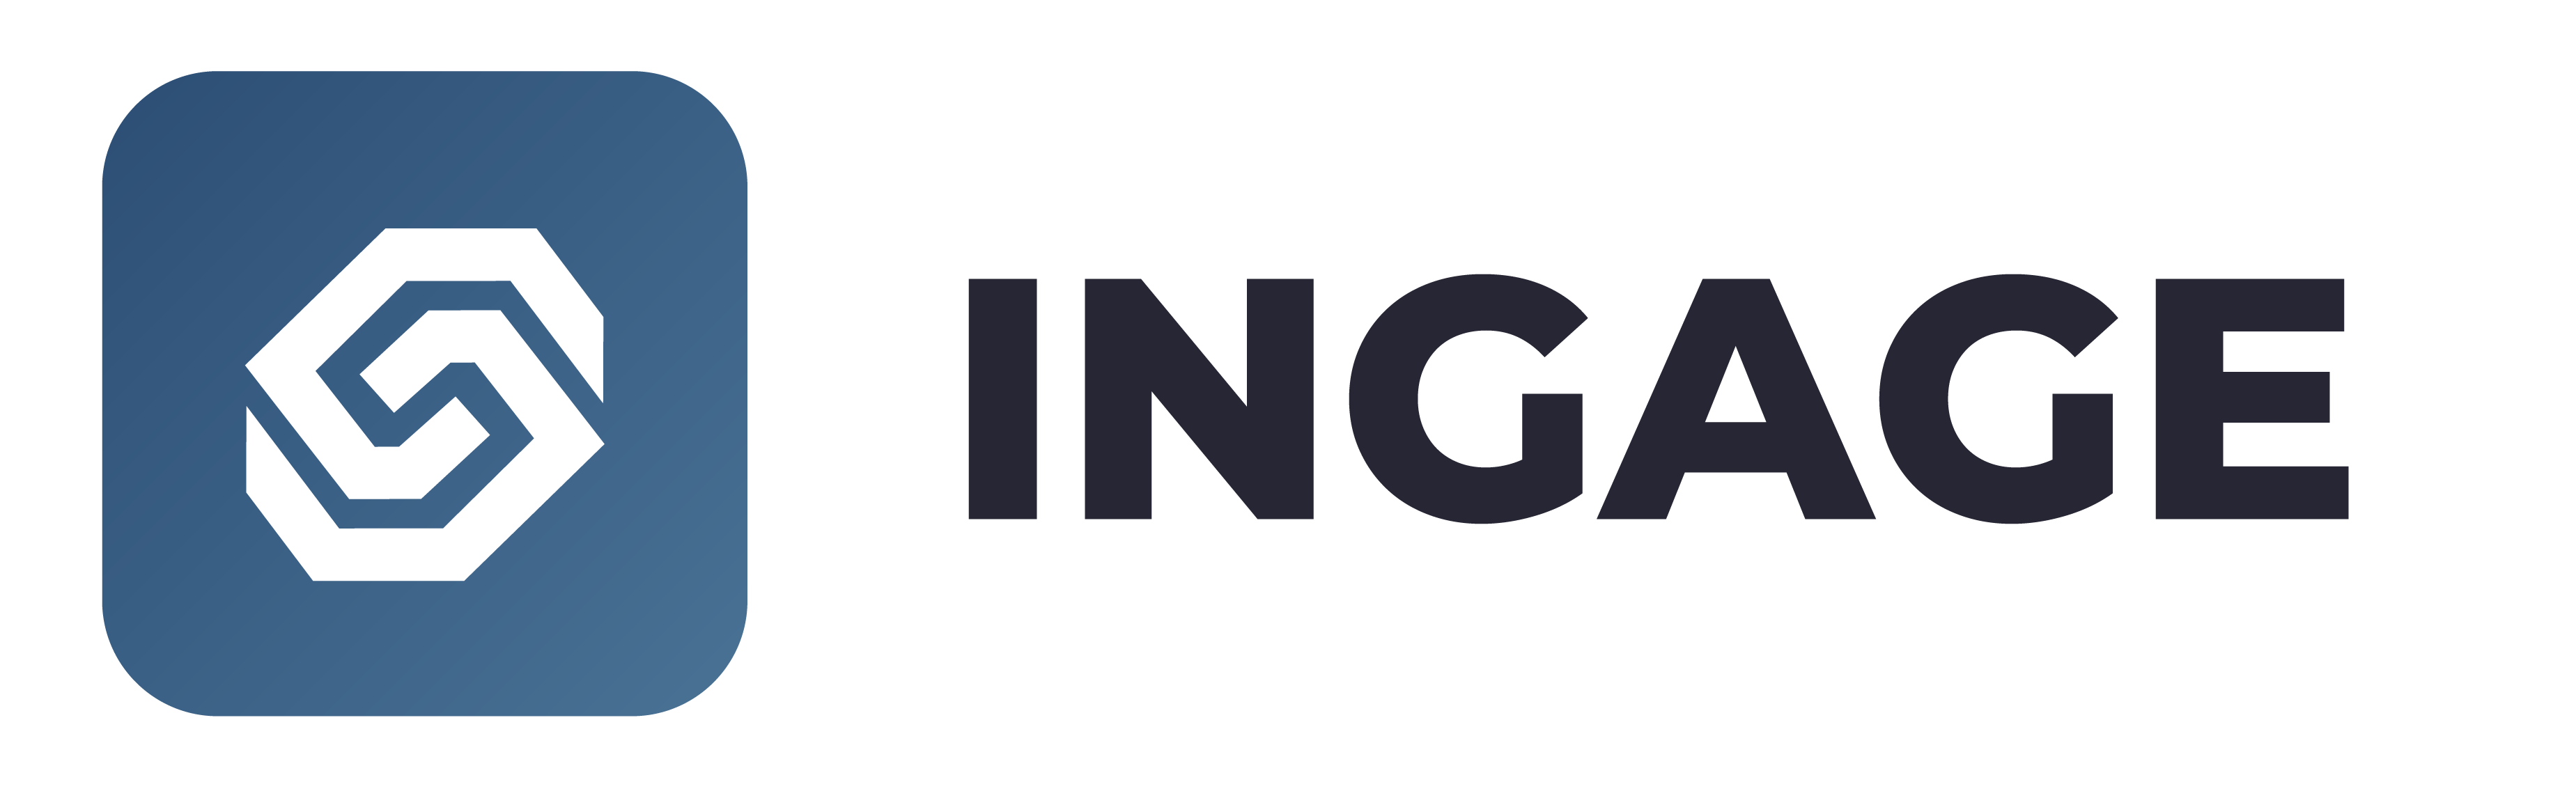 Ingage Group